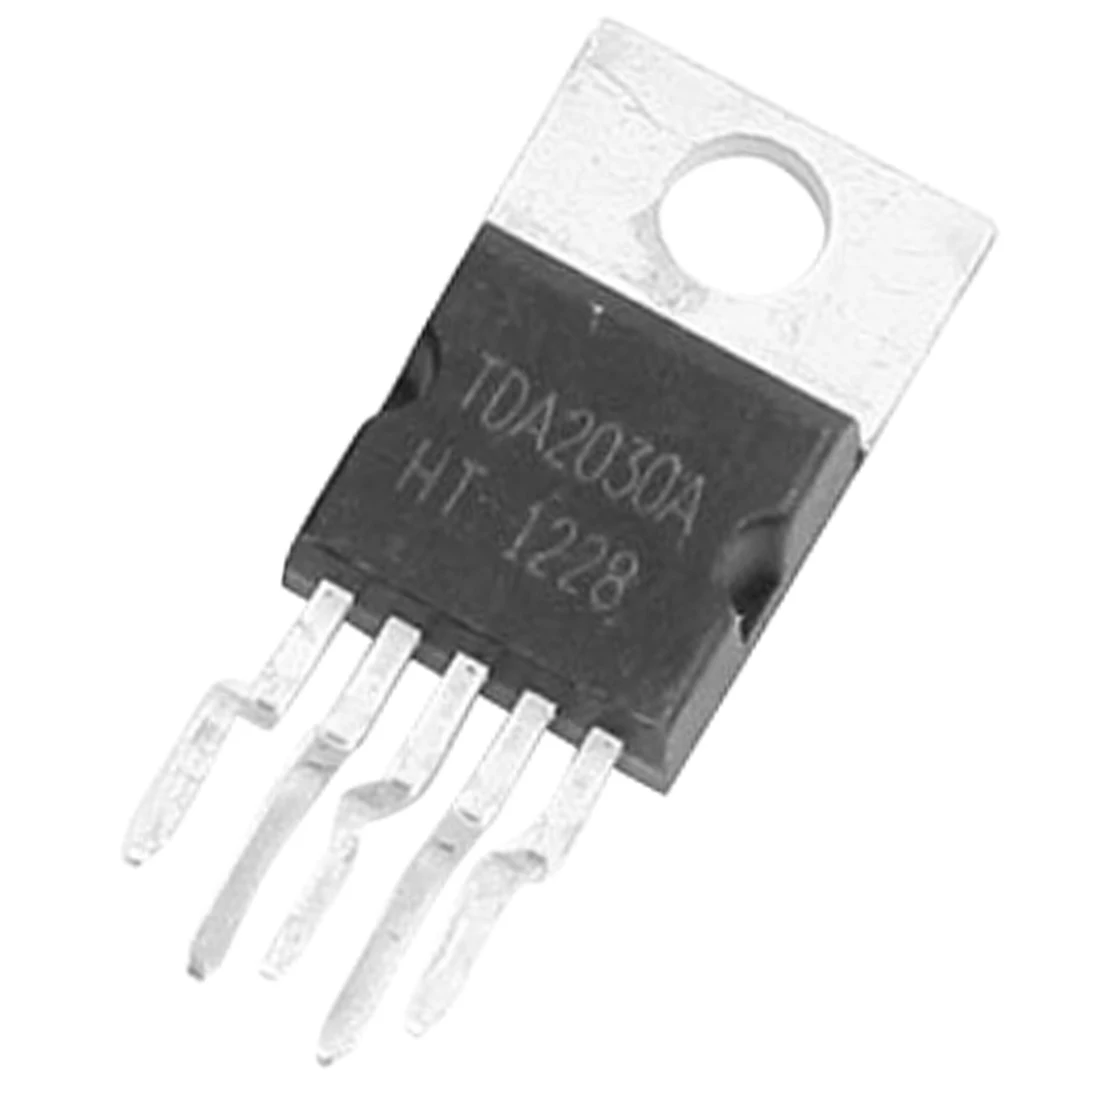 

6Pcs TDA2030A TO-220 18W Hi-Fi Amplifier 35W Driver Integrated Circuit